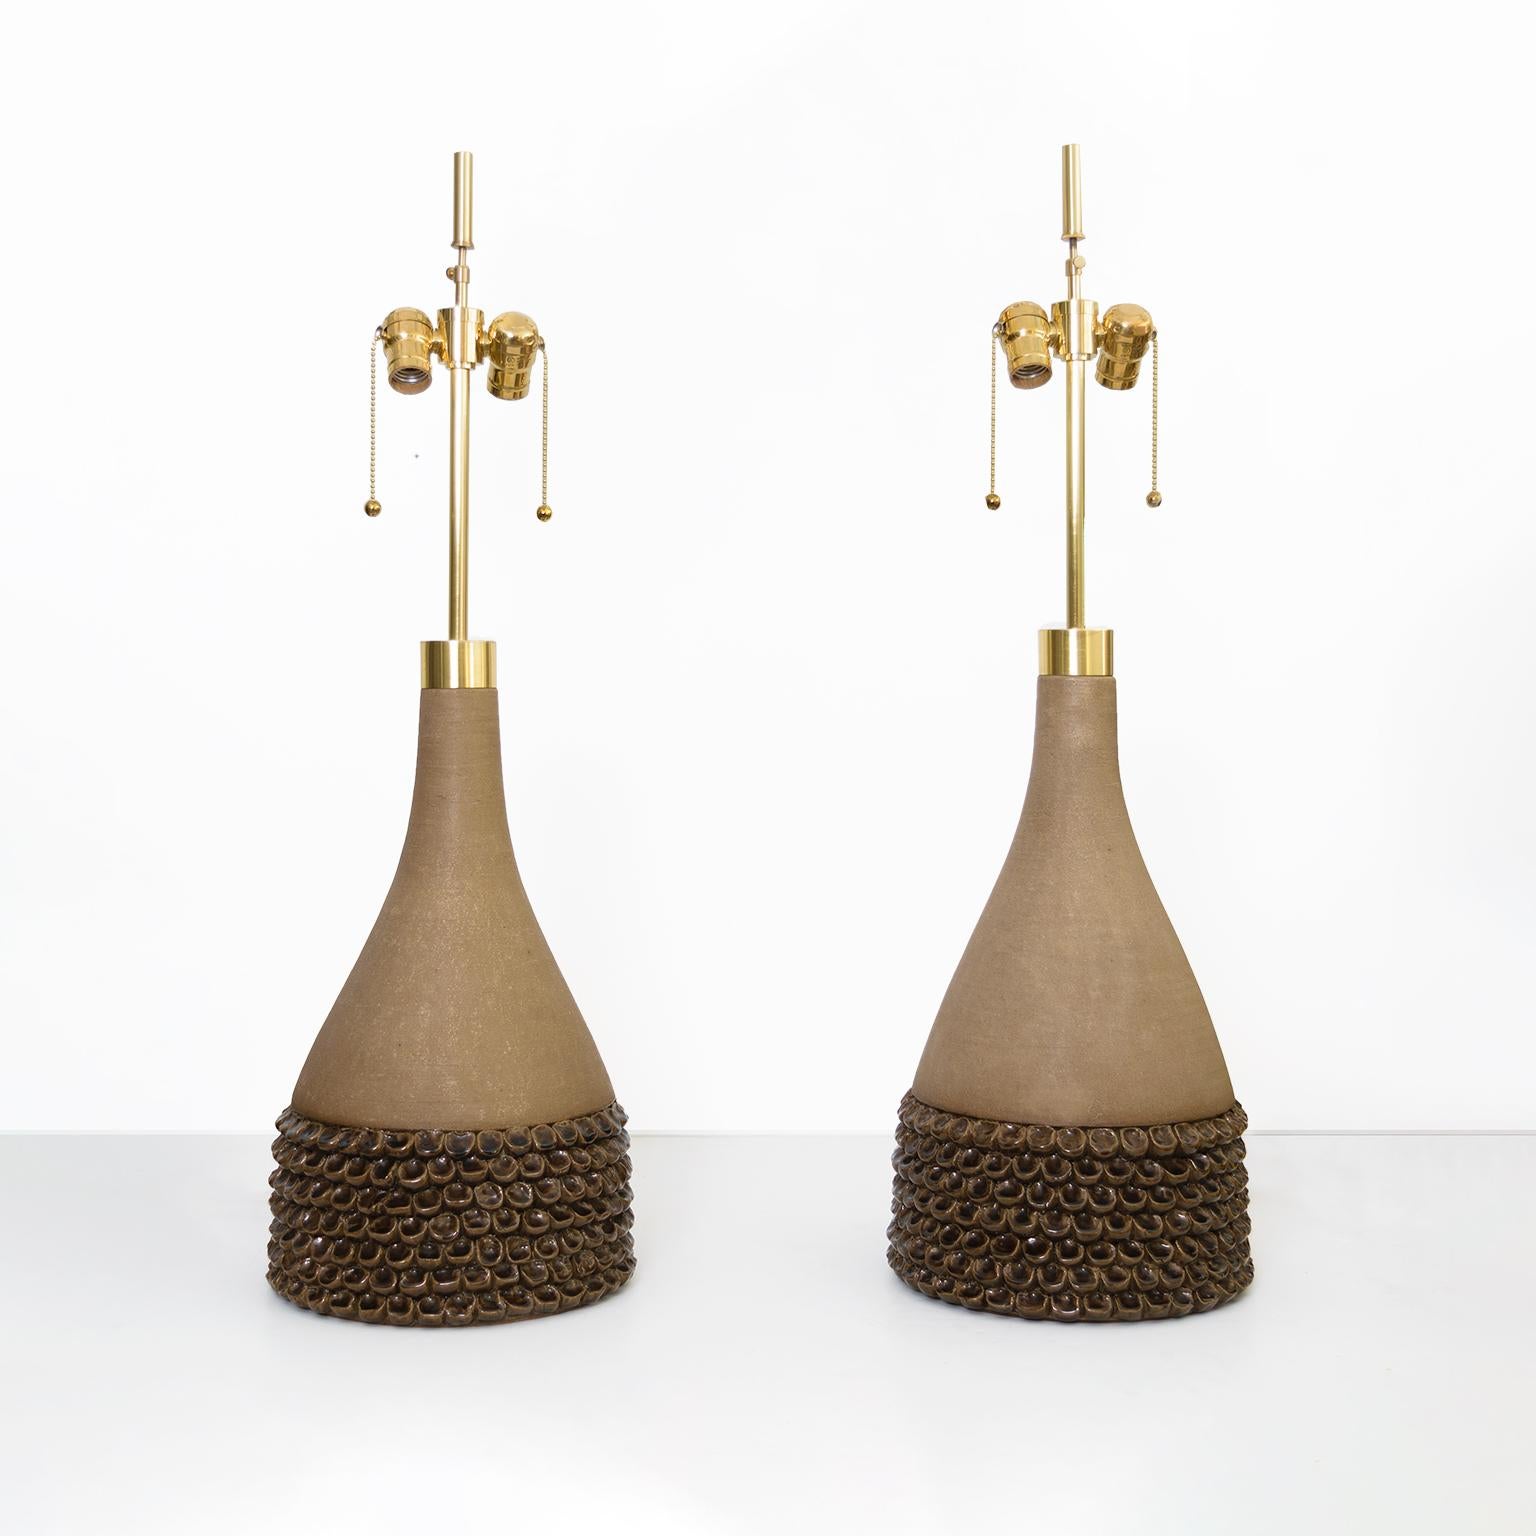 Großes Paar Keramiklampen von Aage Rasmus Selsbo, Studio Selsbo Keramik, Dänemark (Skandinavisch) im Angebot